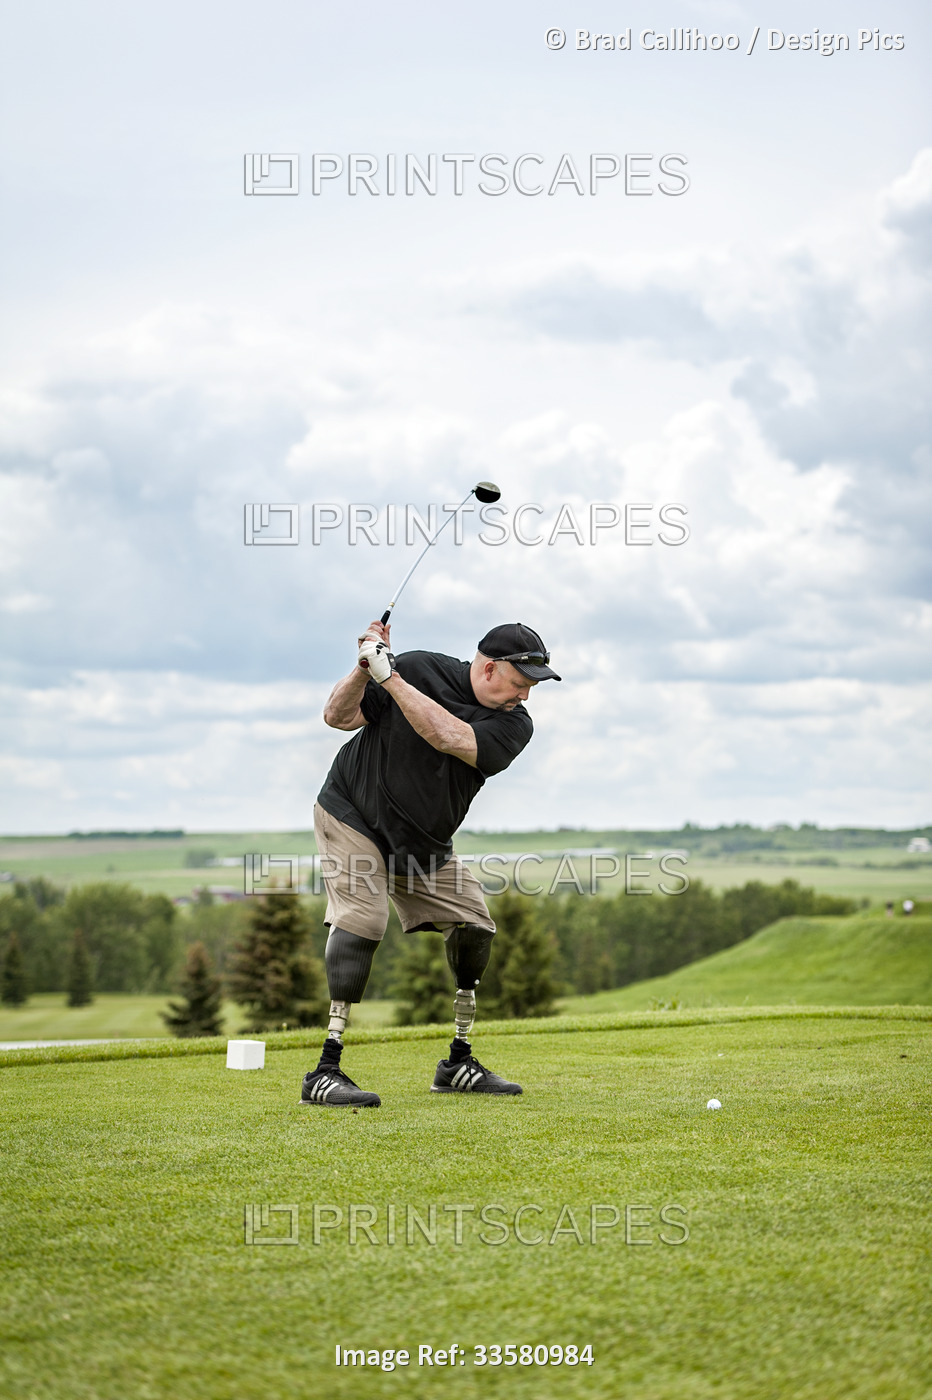 Double amputee with leg prosthetics on the golf course; Okotoks, Alberta, Canada